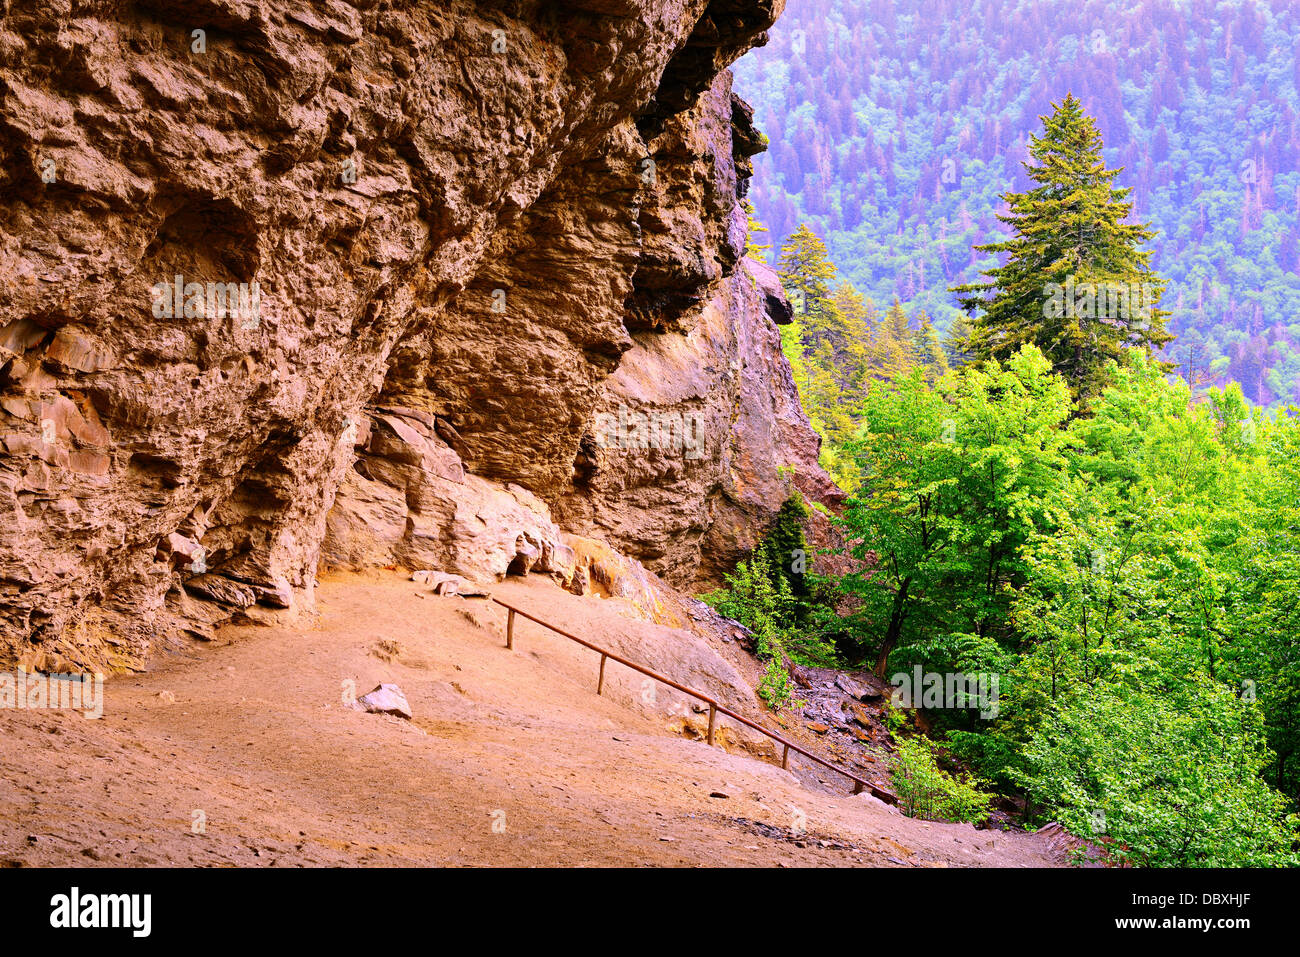 Grotte d'alun dans les Great Smoky Mountains National Forest. Banque D'Images